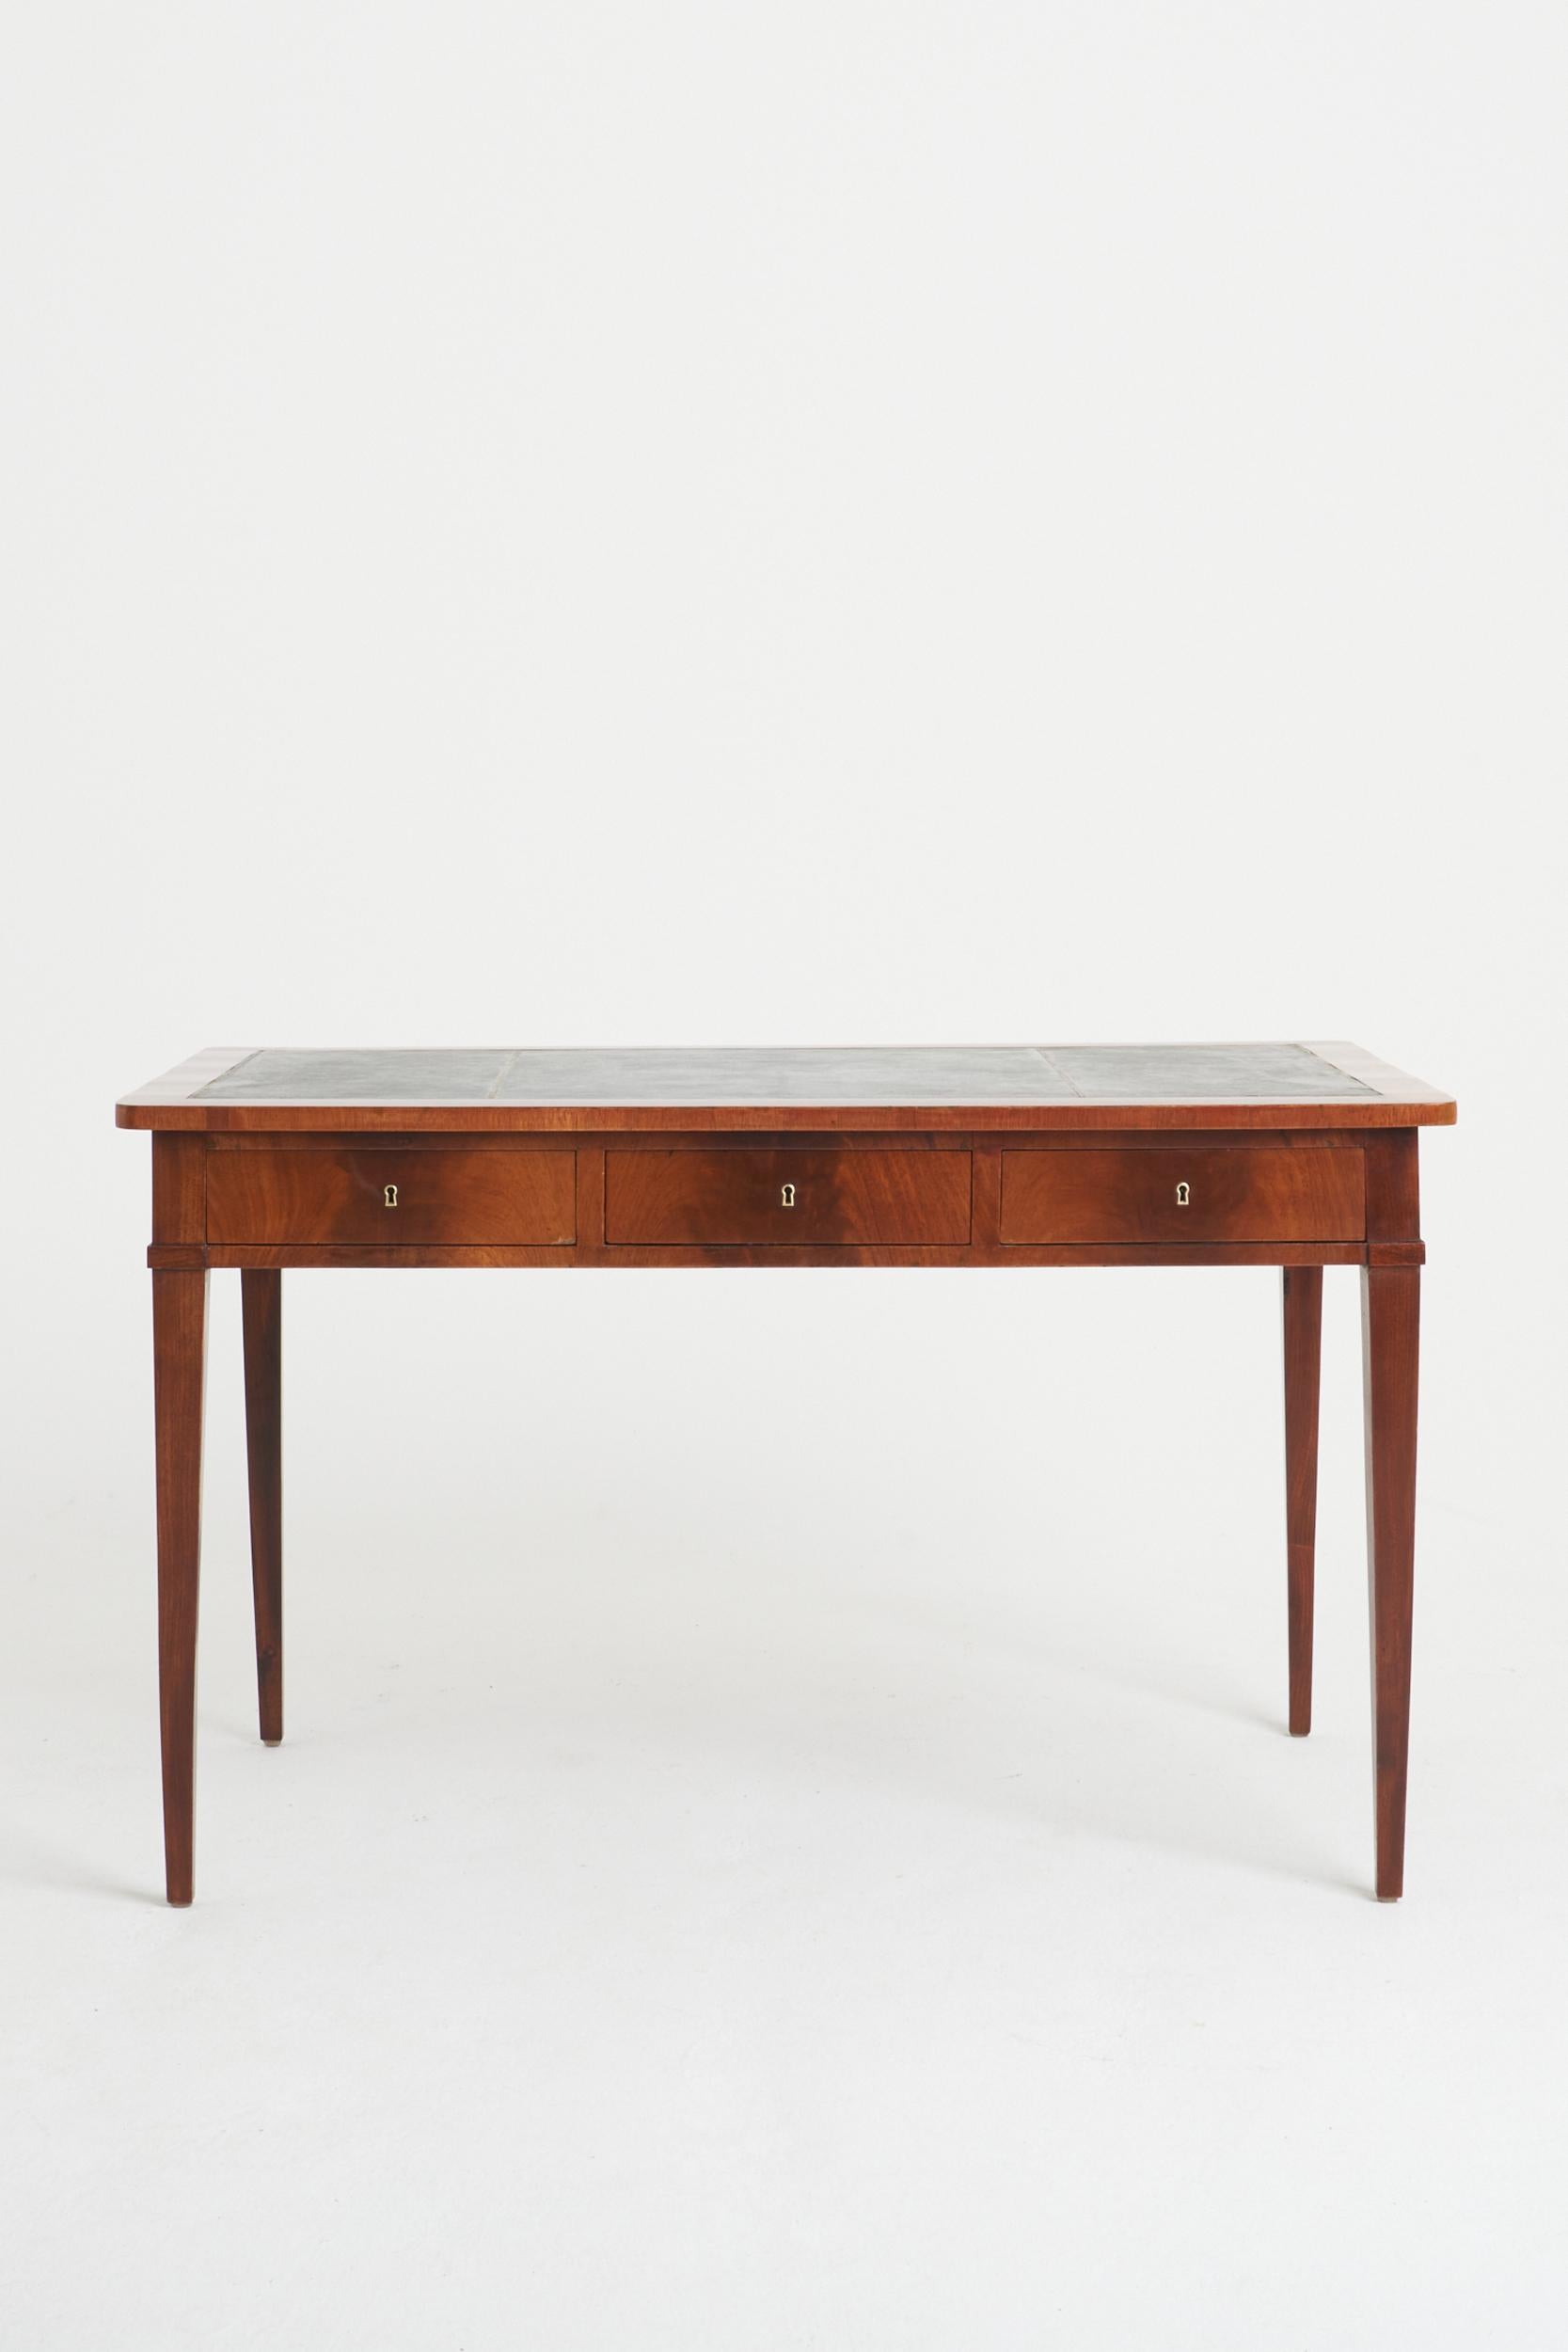 Swedish Neoclassical Mahogany Leather Top Desk